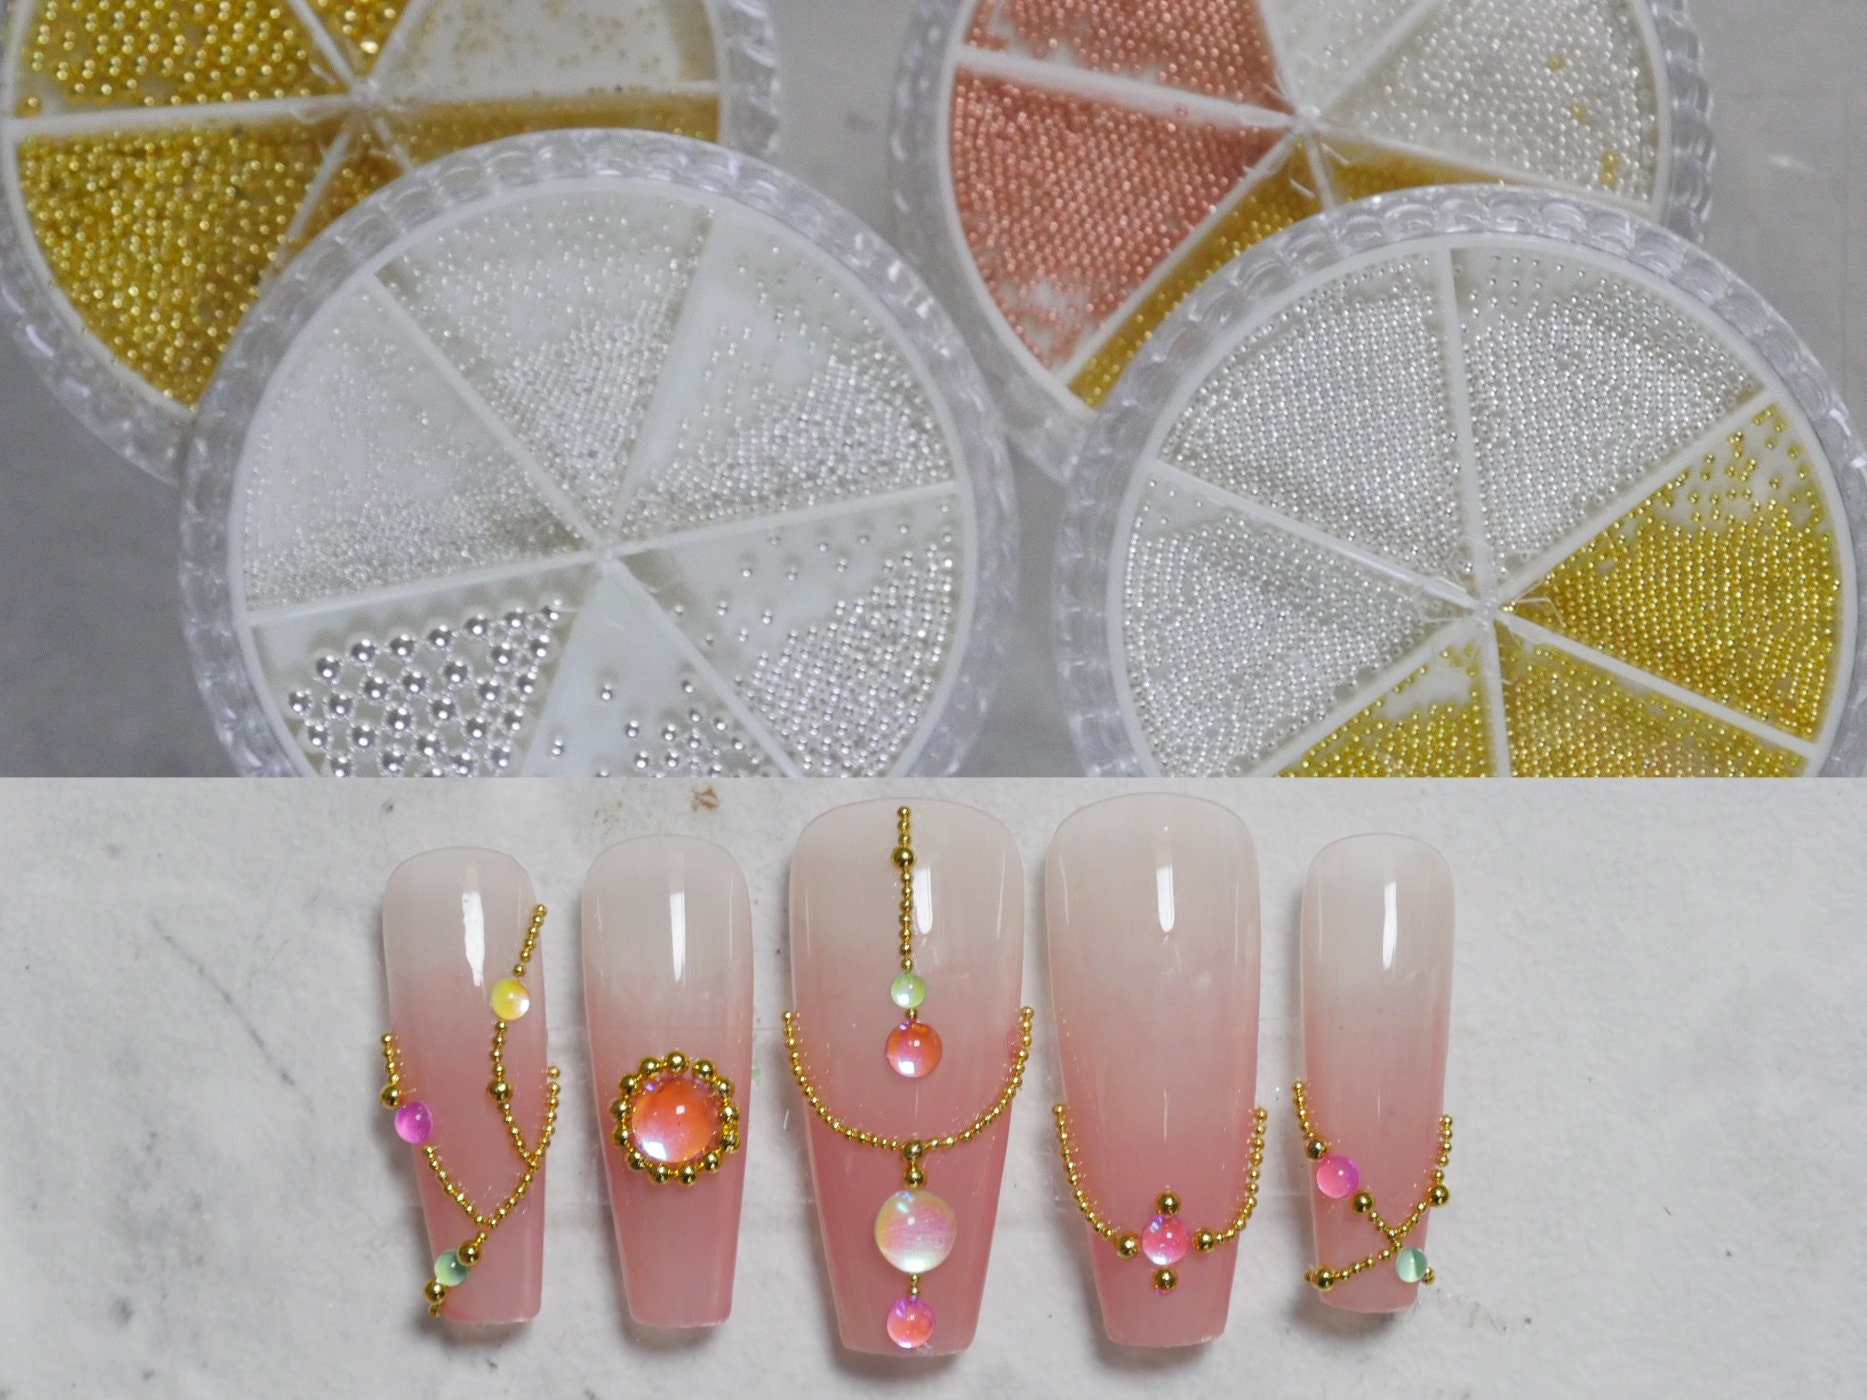 DOTTING TOOL NAIL ART #20 / Lavender Pink Dotticure NAILS | Dot nail art,  Dot nail art designs, Nail art kit